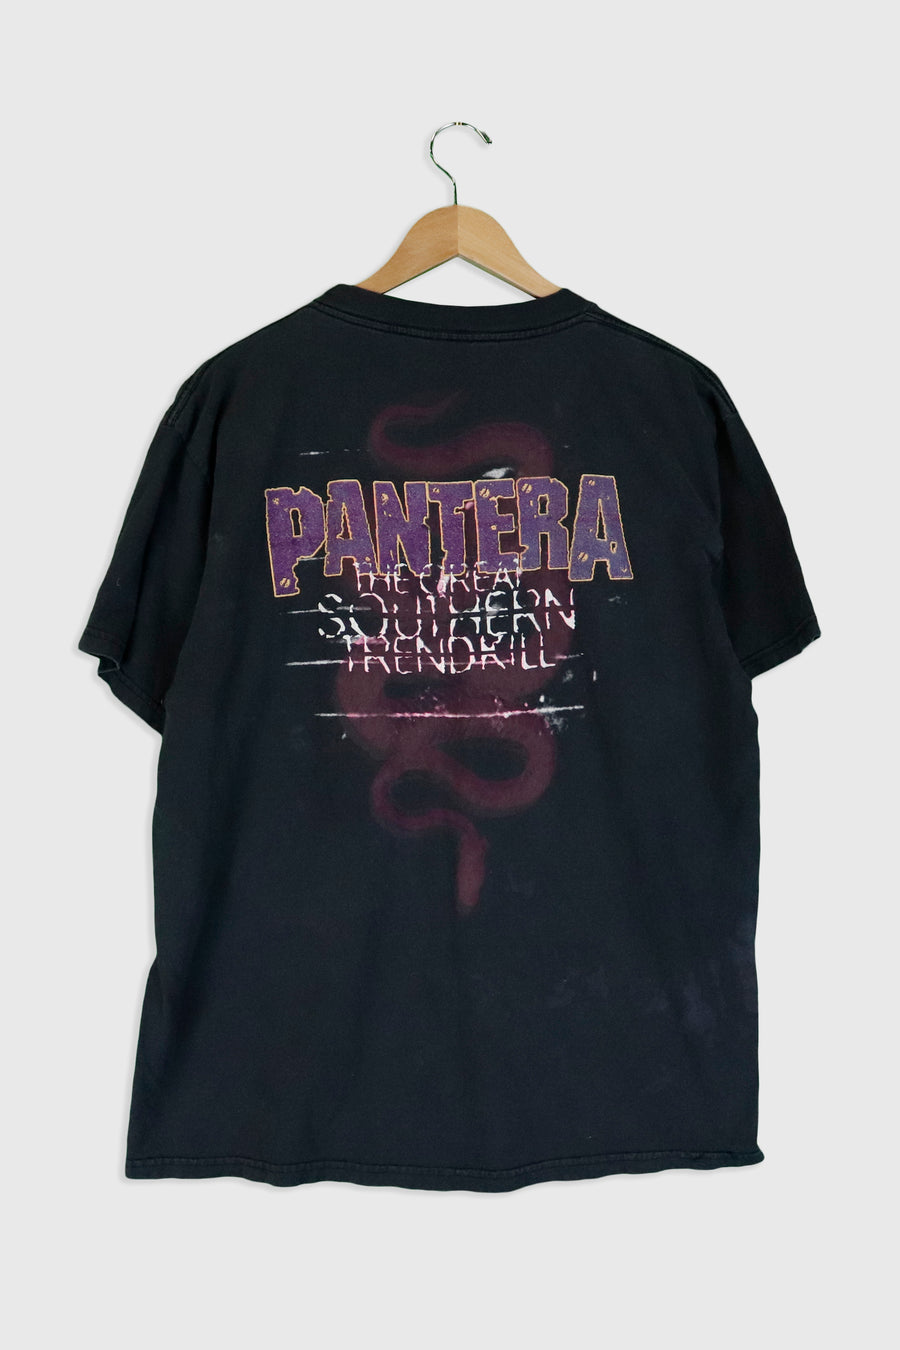 Vintage Pantera The Great Southern Trendkill T Shirt Sz L